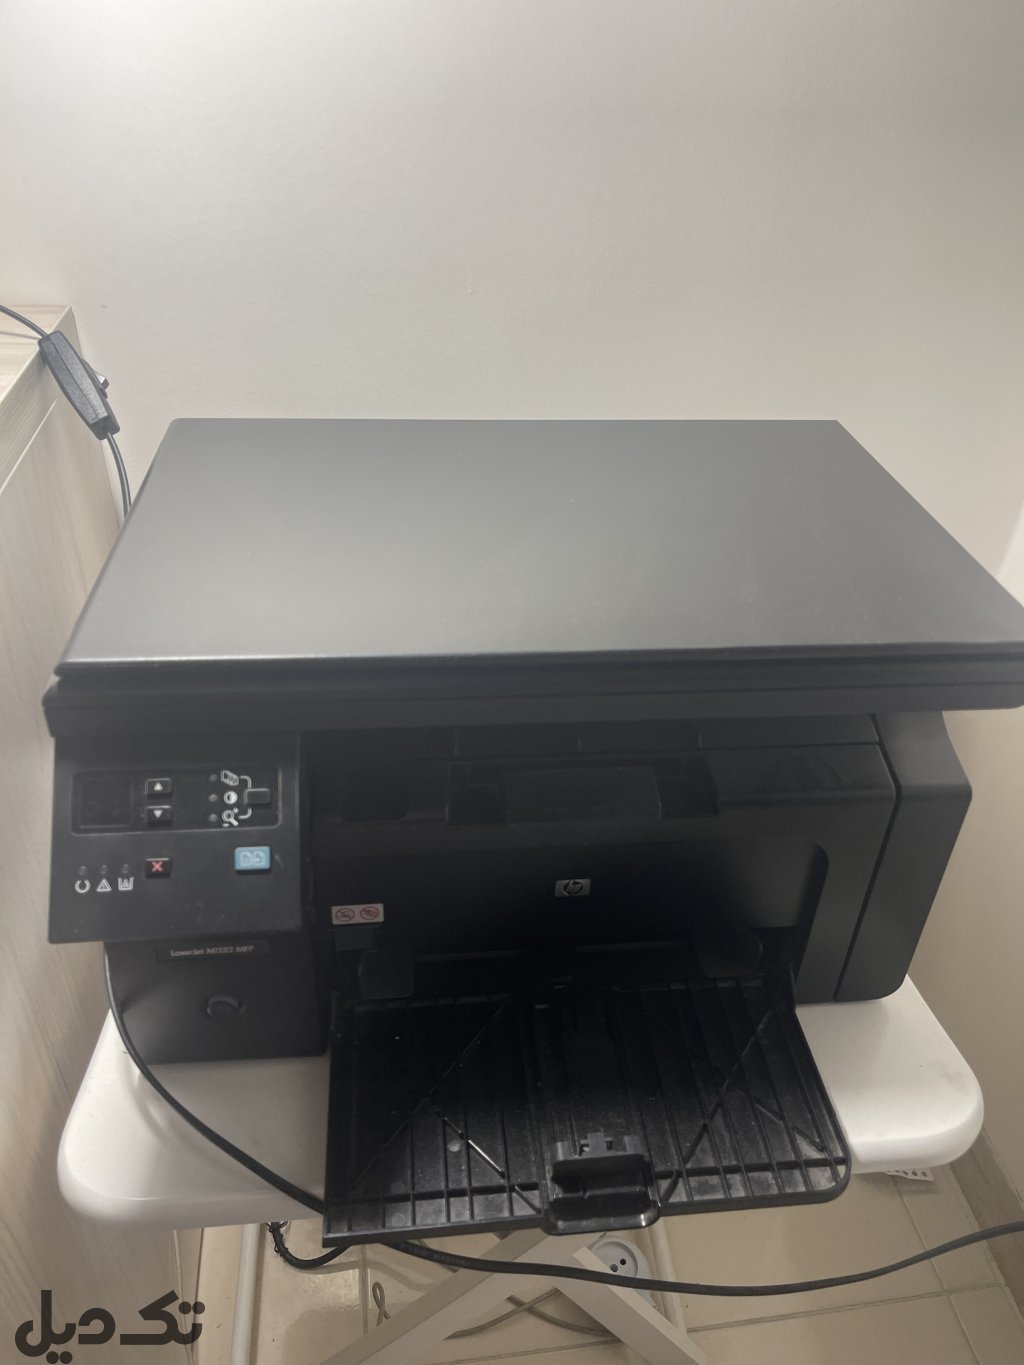 Hp laserjet printer and scanner M1132